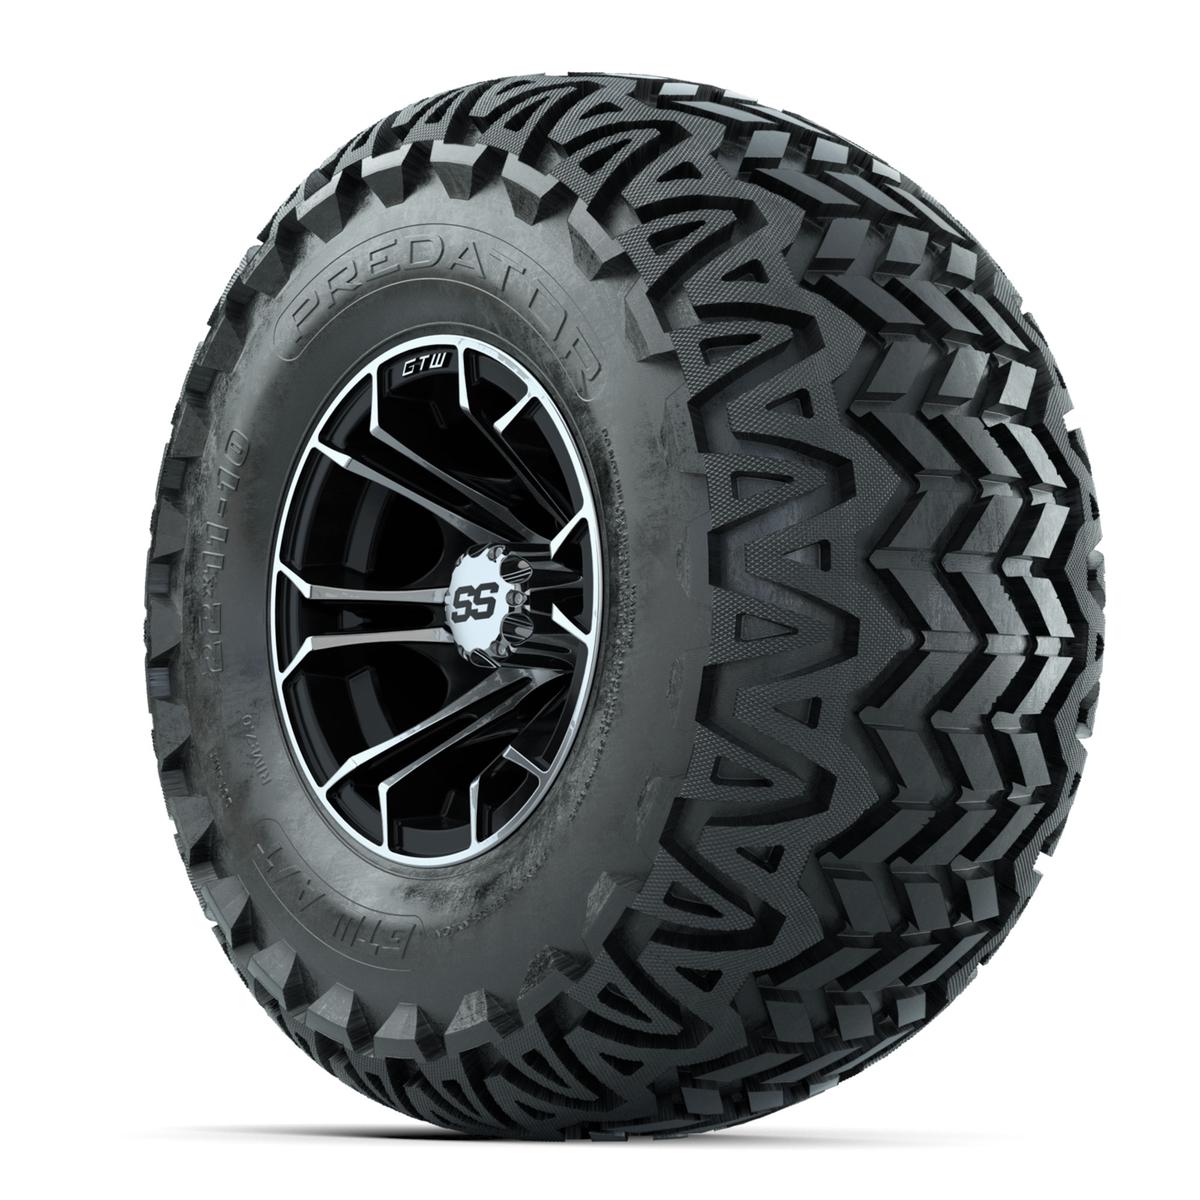 GTW Spyder Machined/Black 10 in Wheels with 22x11-10 Predator All Terrain Tires – Full Set